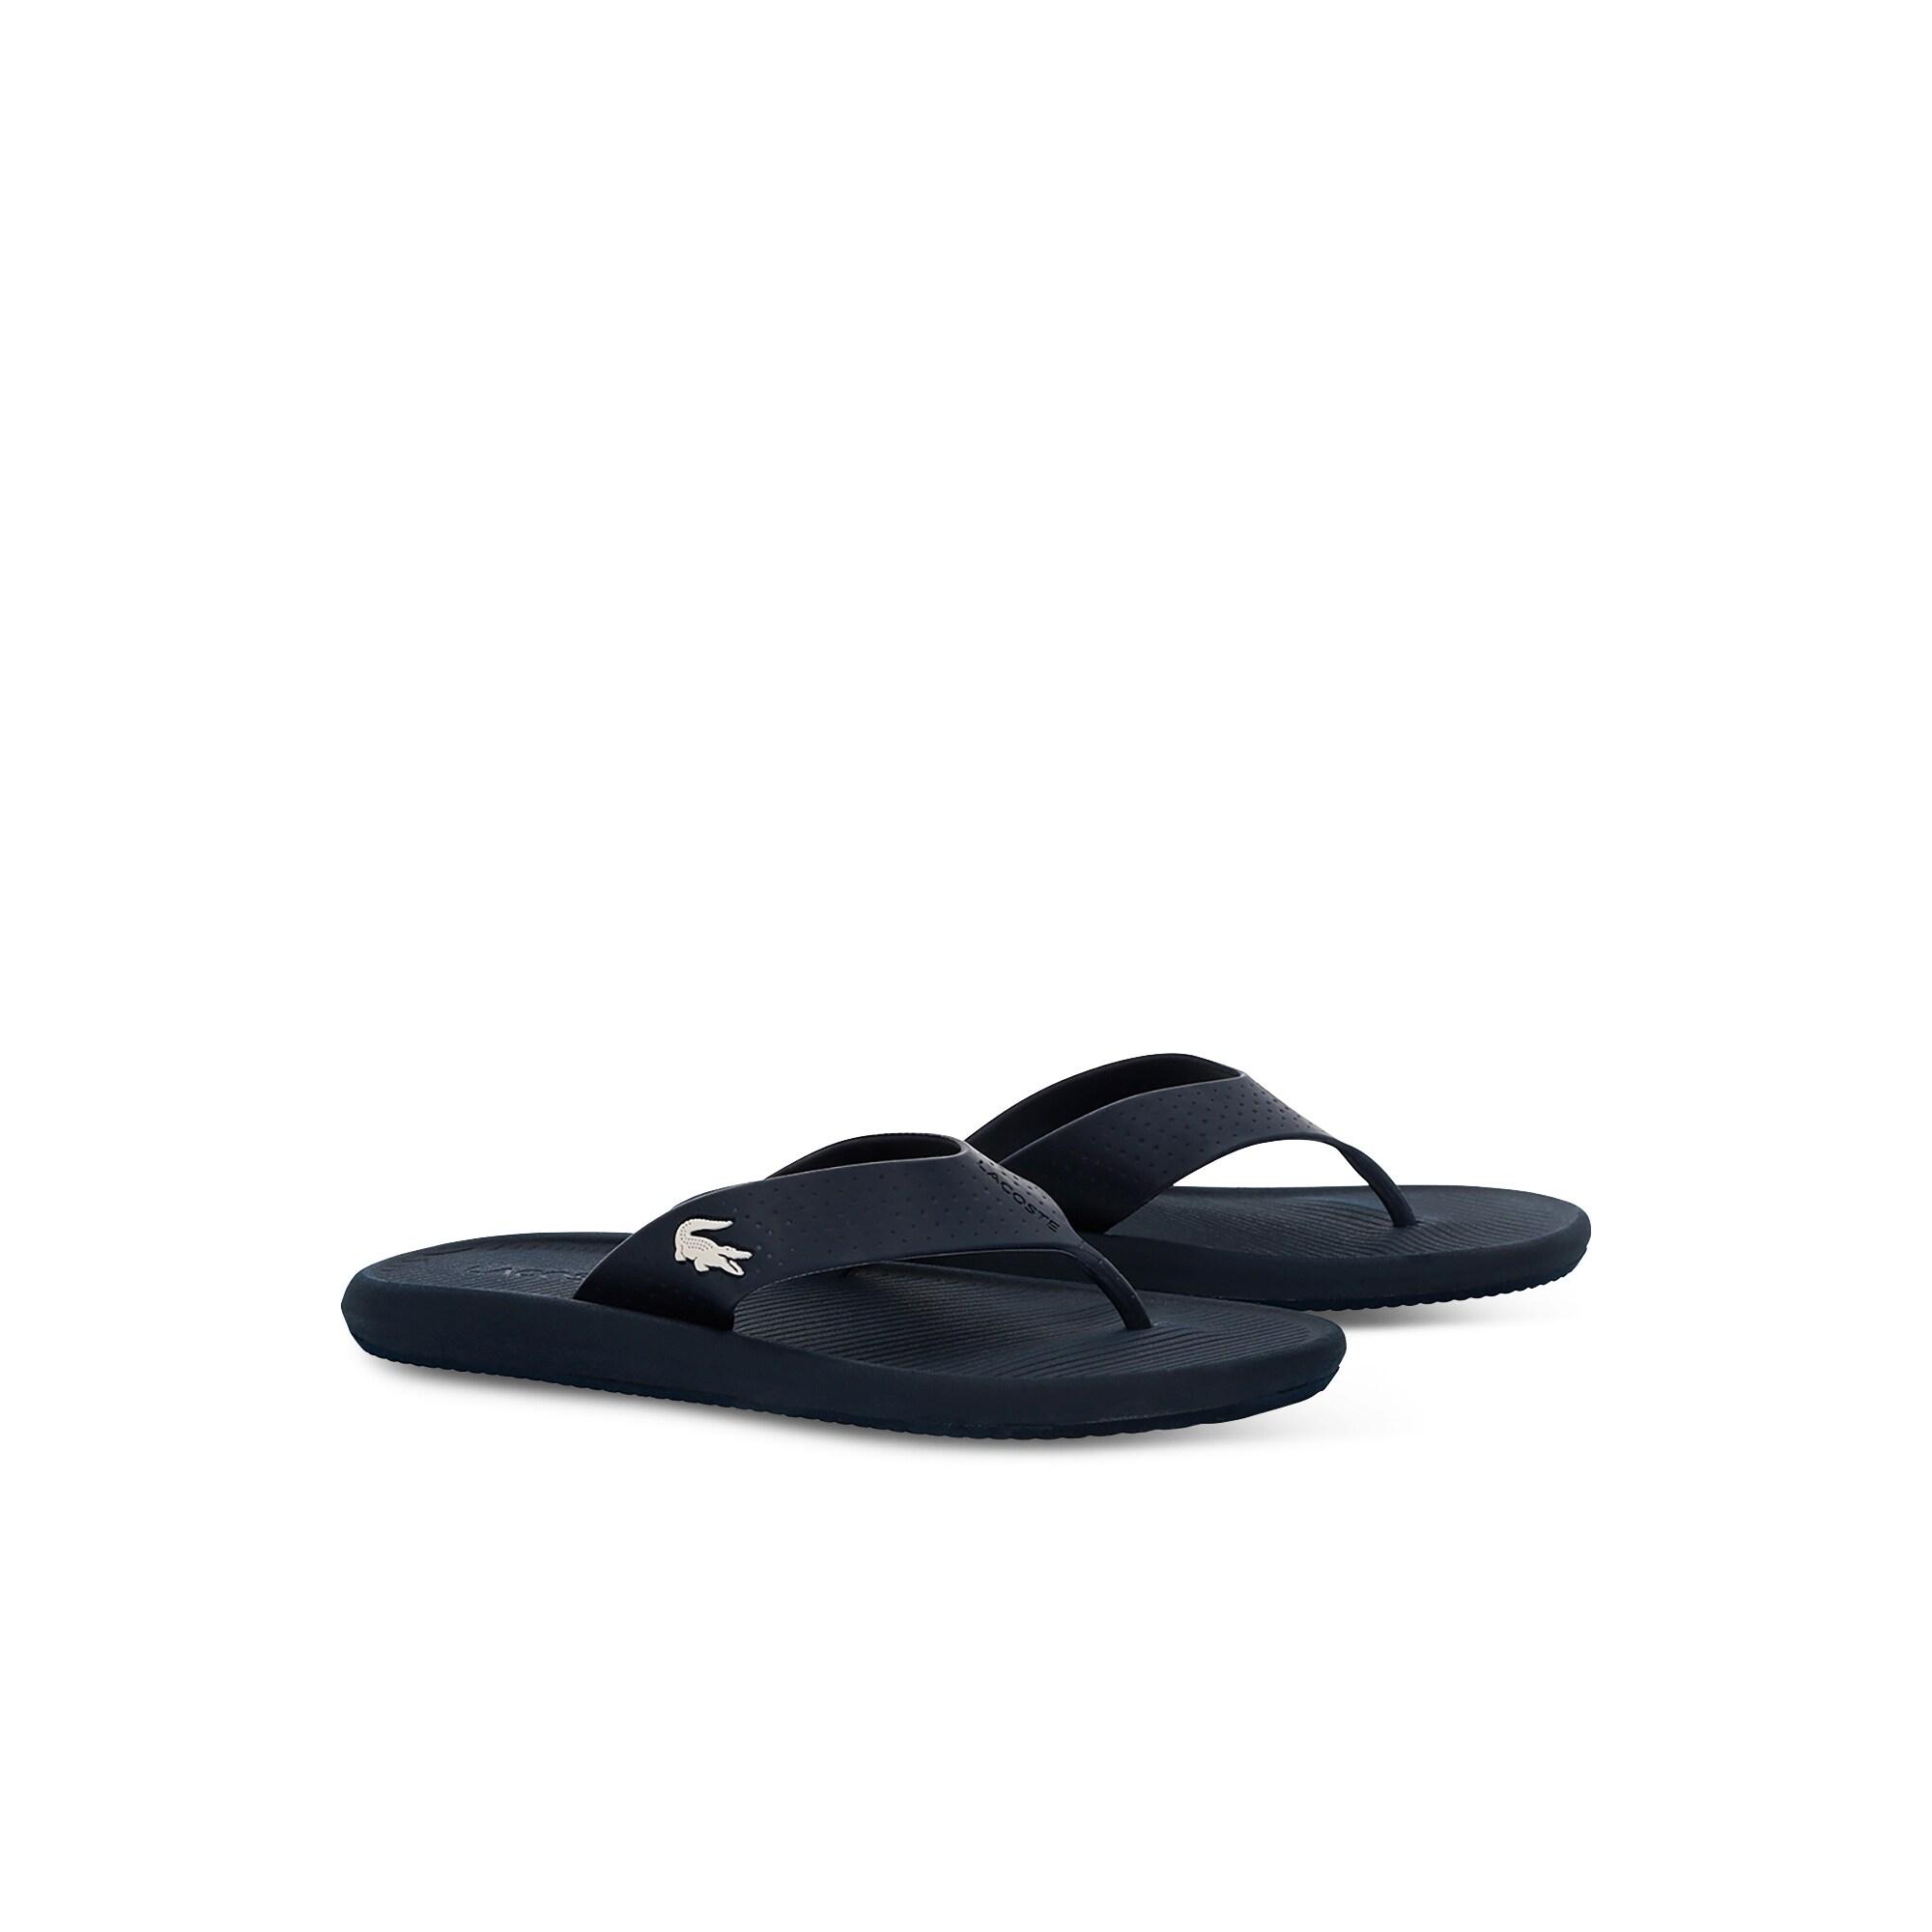 Lacoste Men's Croco Sandal 219 1 Cma 